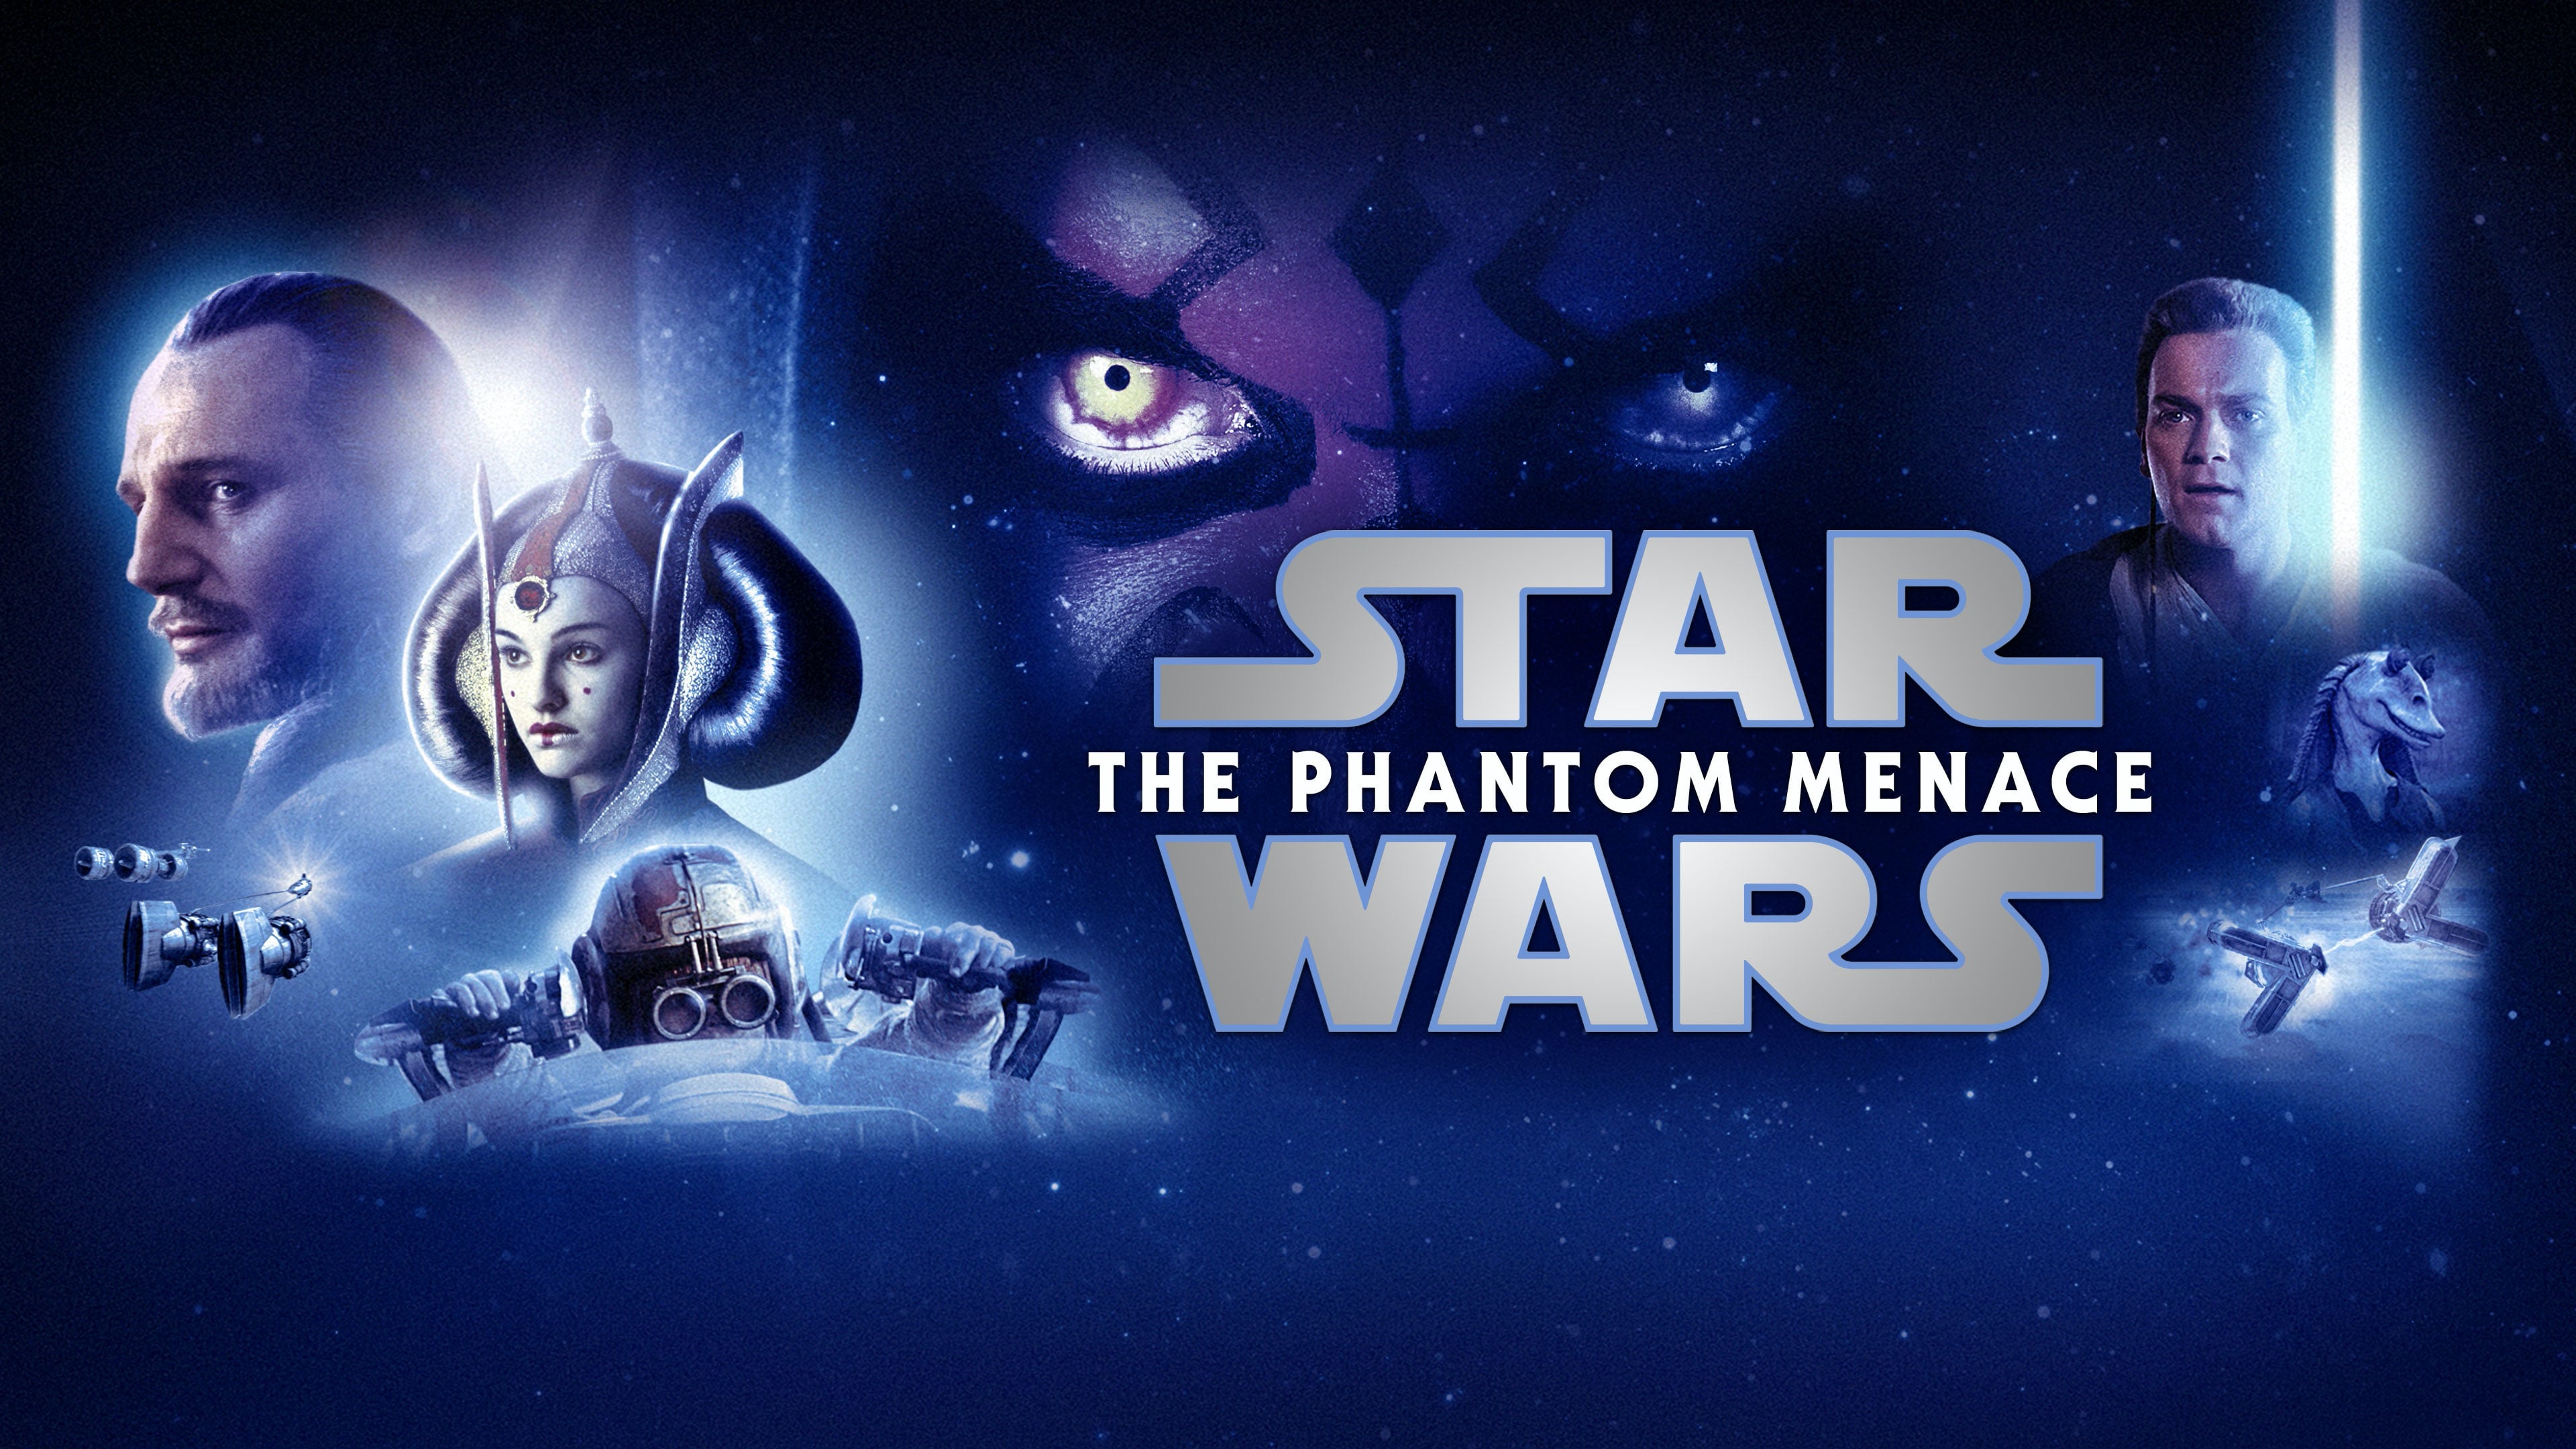 movie, star wars episode i: the phantom menace, star wars, star wars: episode i the phantom menace